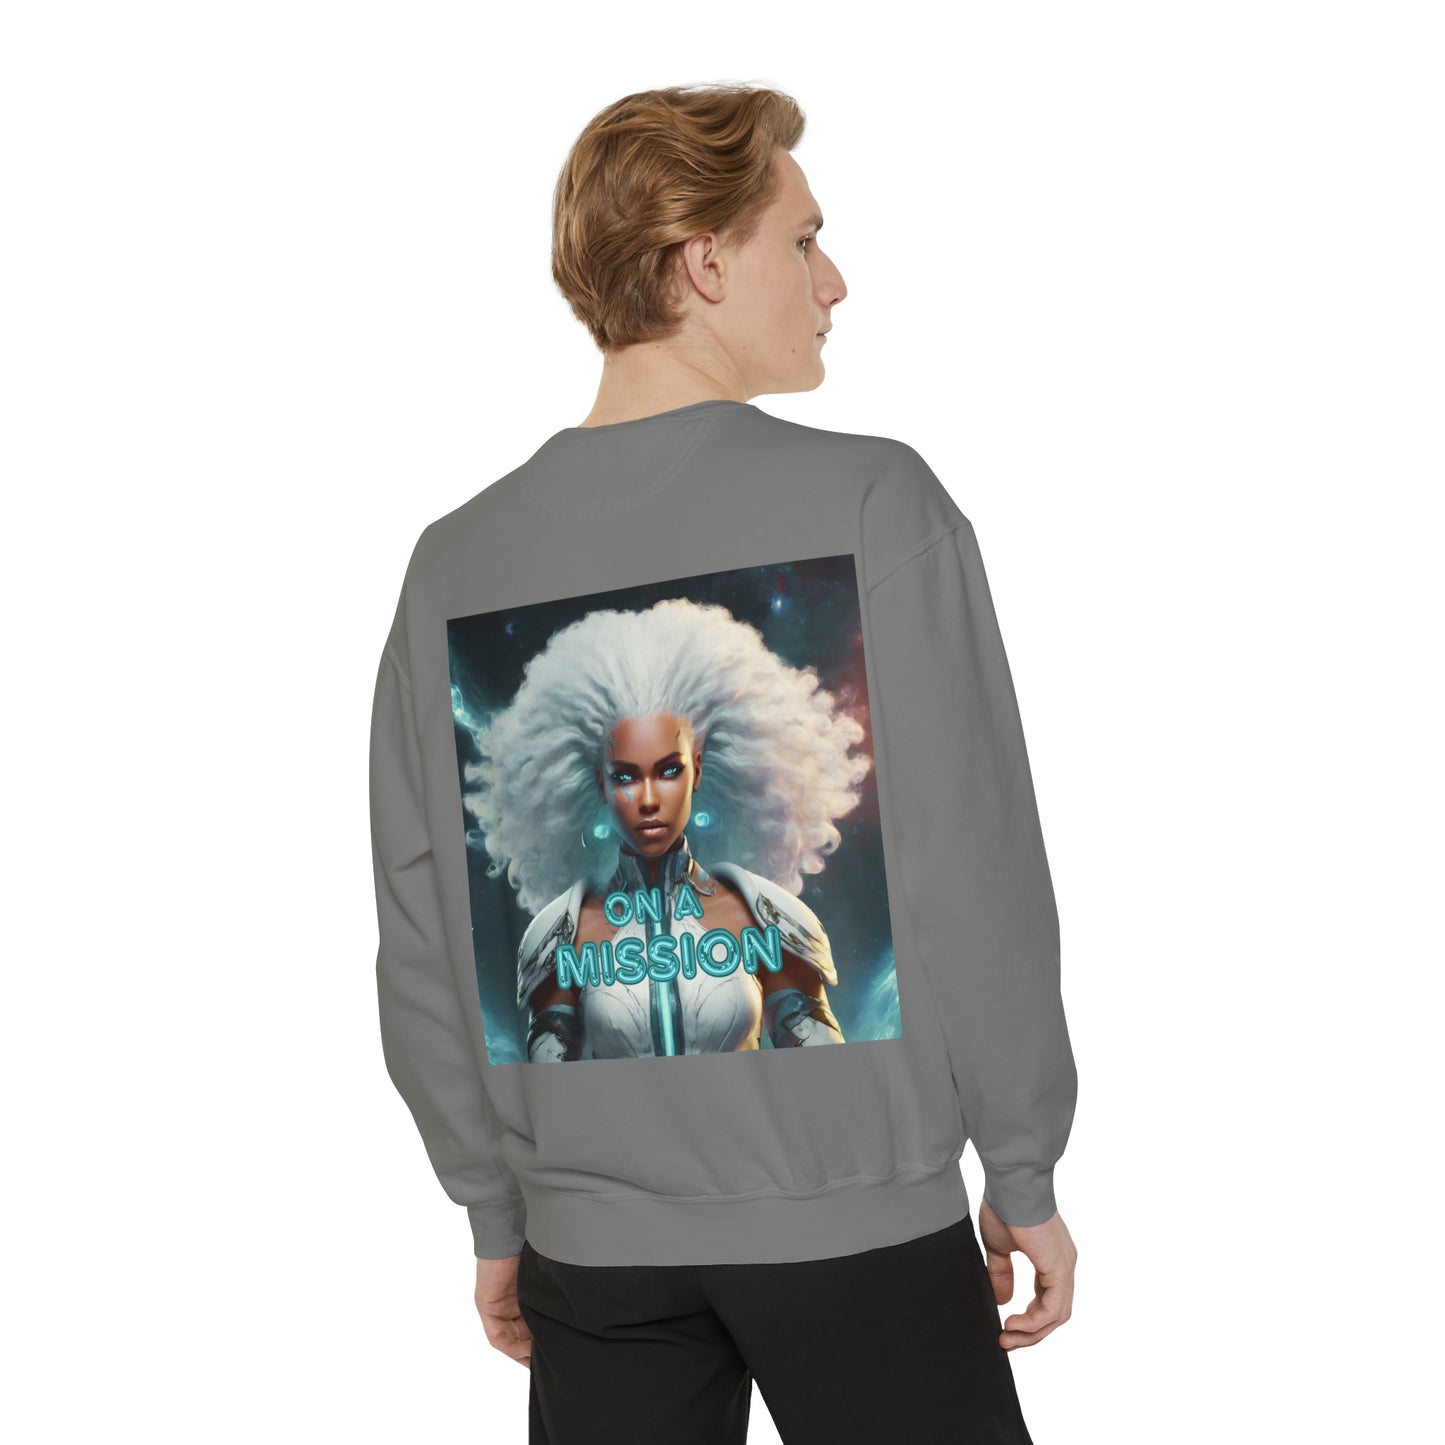 "Earth Angel on a Mission" Unisex Sweatshirt